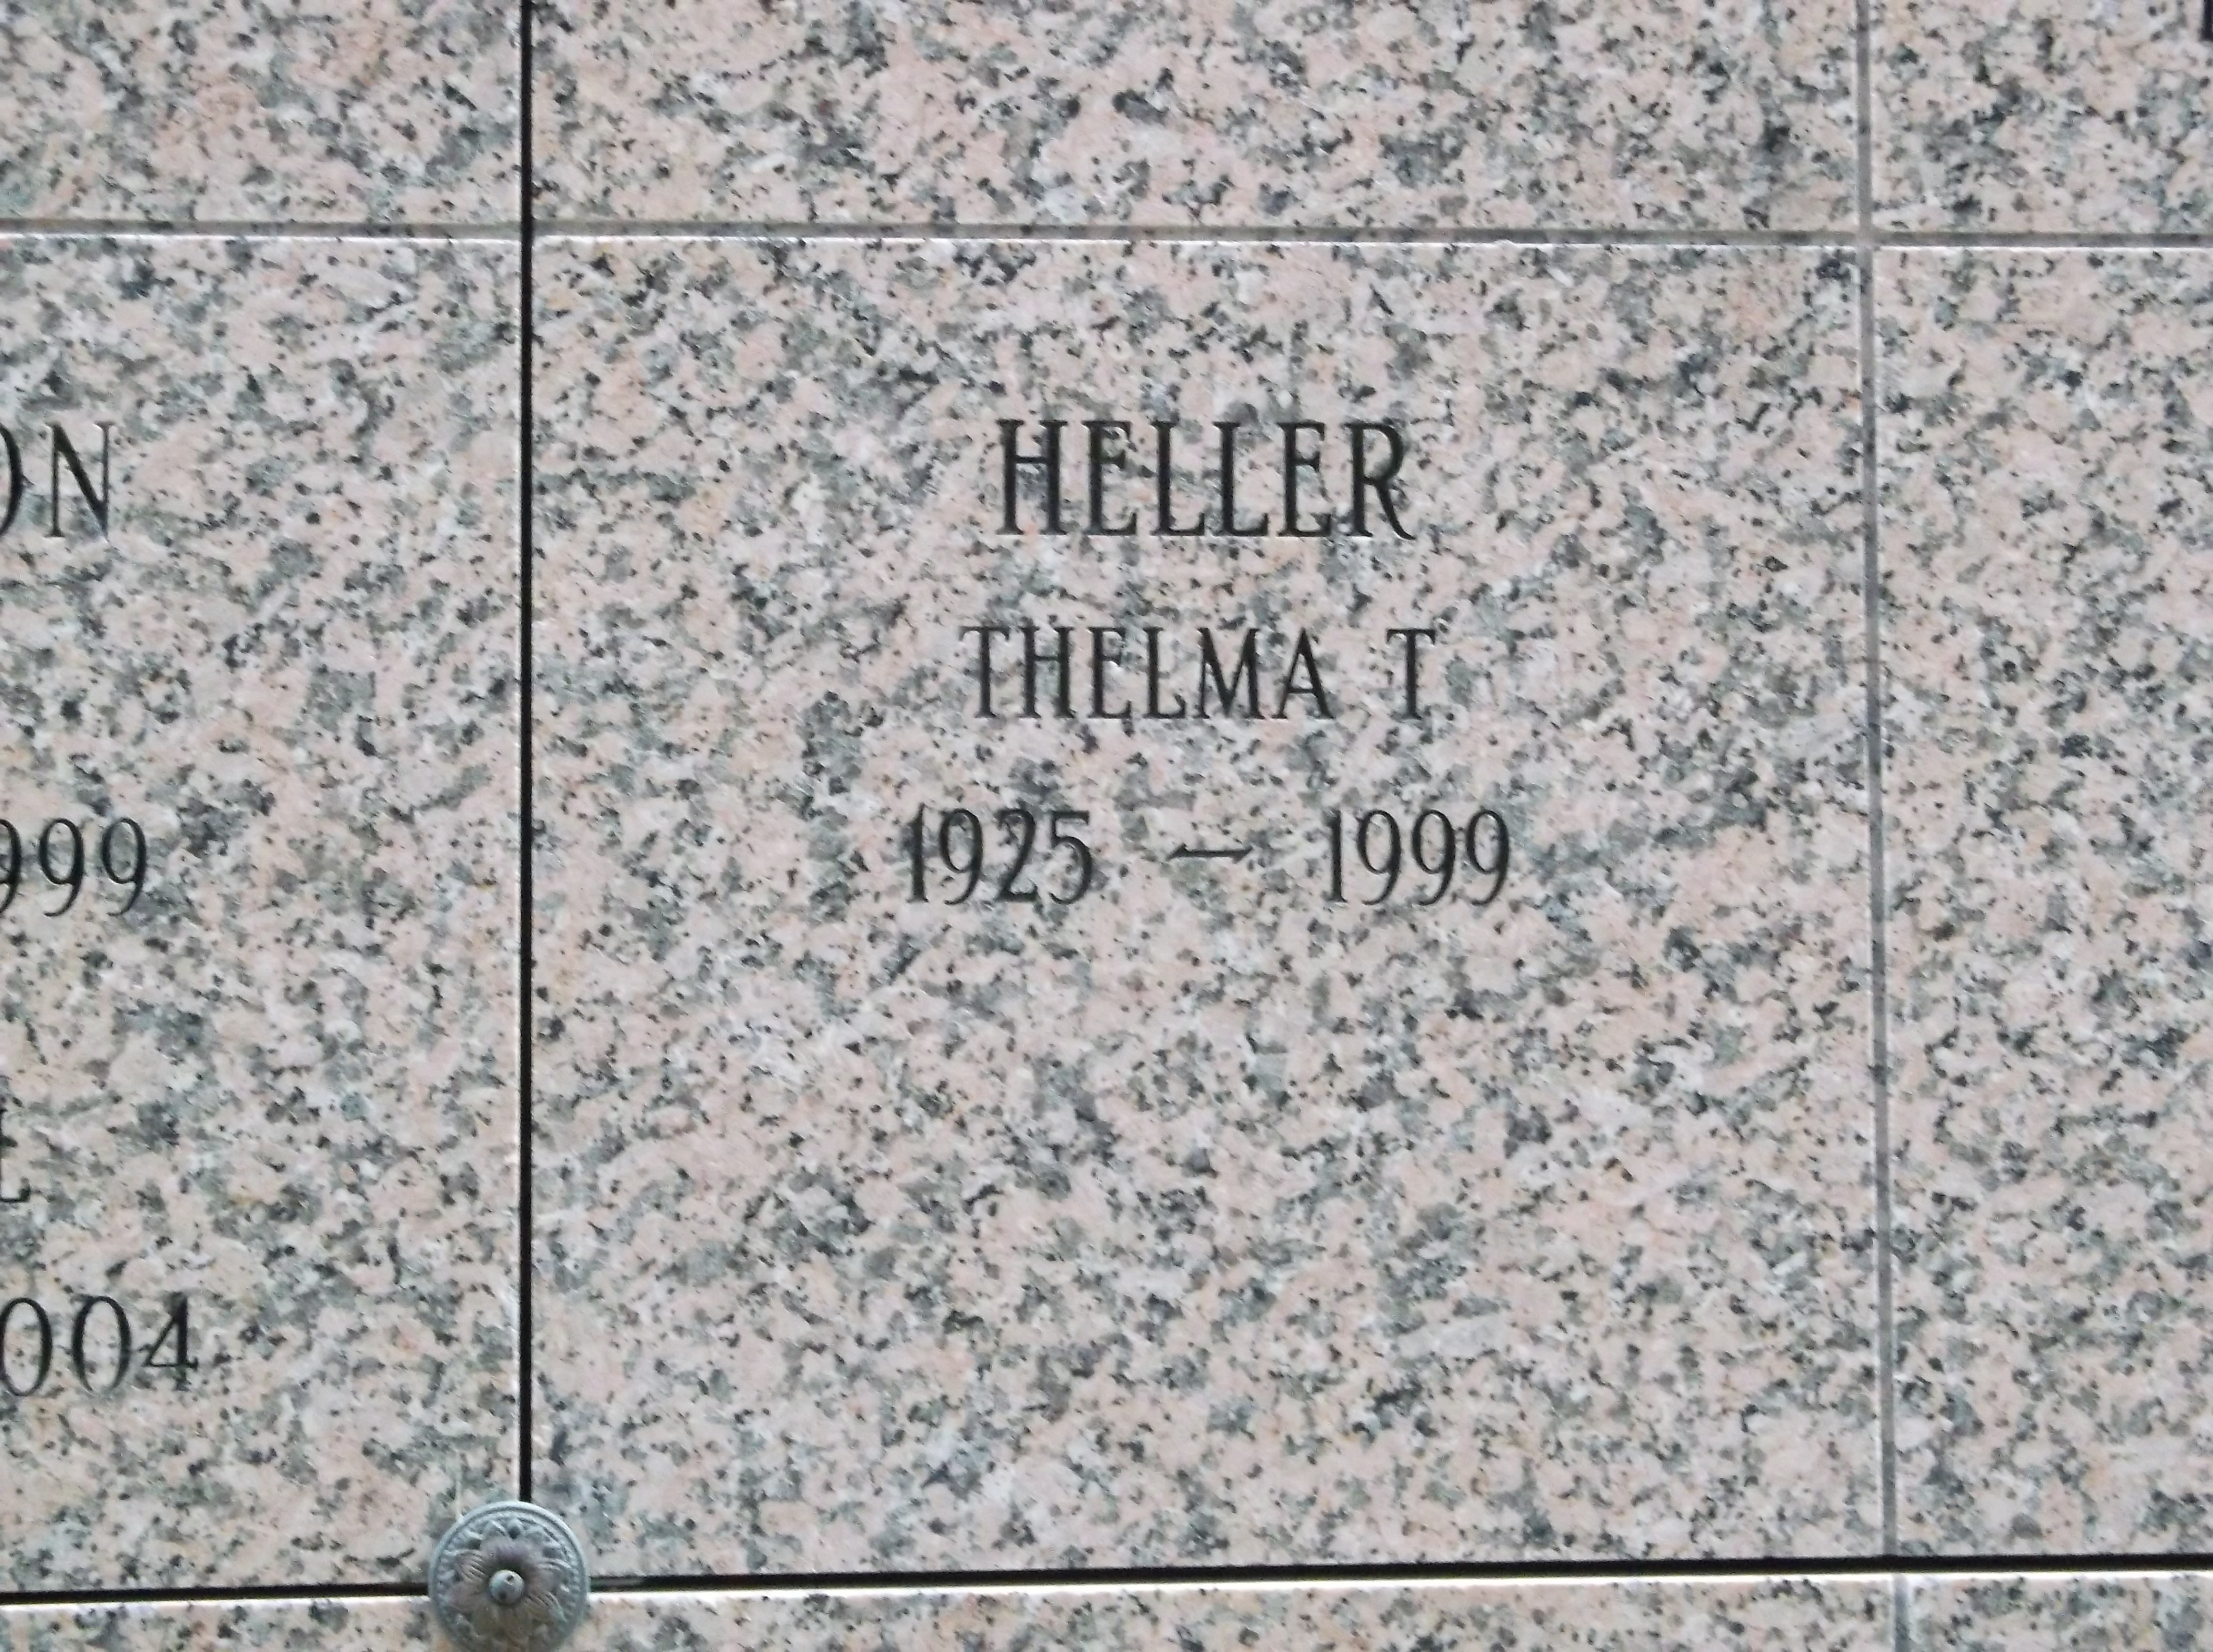 Thelma T Heller